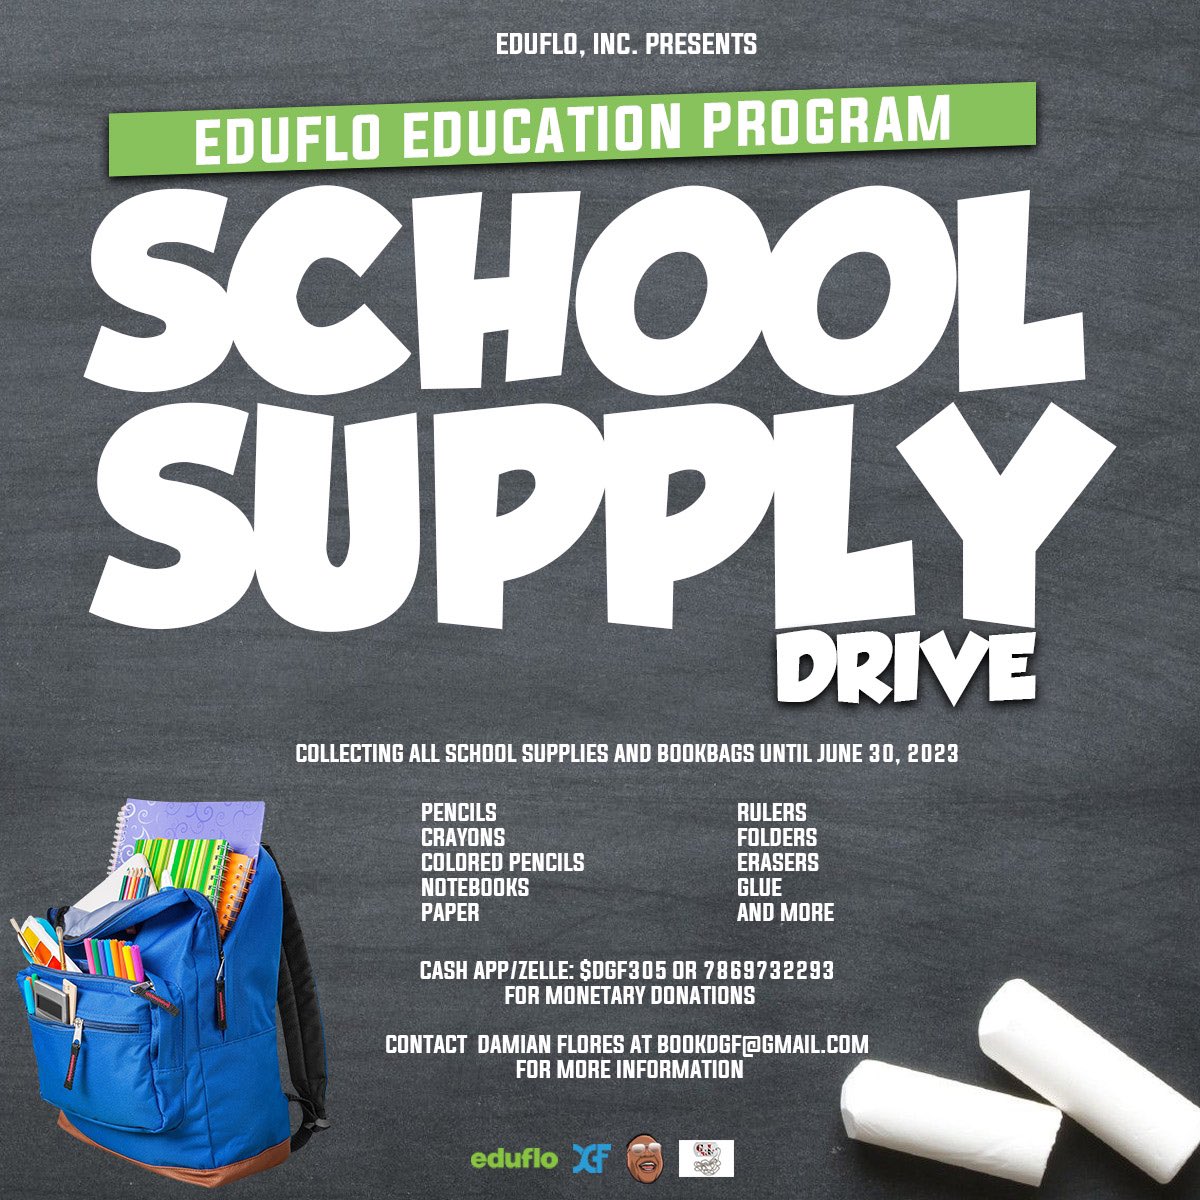 An EduFlo Education Program - School Supply Drive 📚🖇✂️✏️🖍📓

We are collecting school supplies & book bags until June 30, 2023. 

Visit us at eduflo.org

#EduFlo #Education #GetRightOrGetLeft #BookDGF #SchoolSupplyDrive